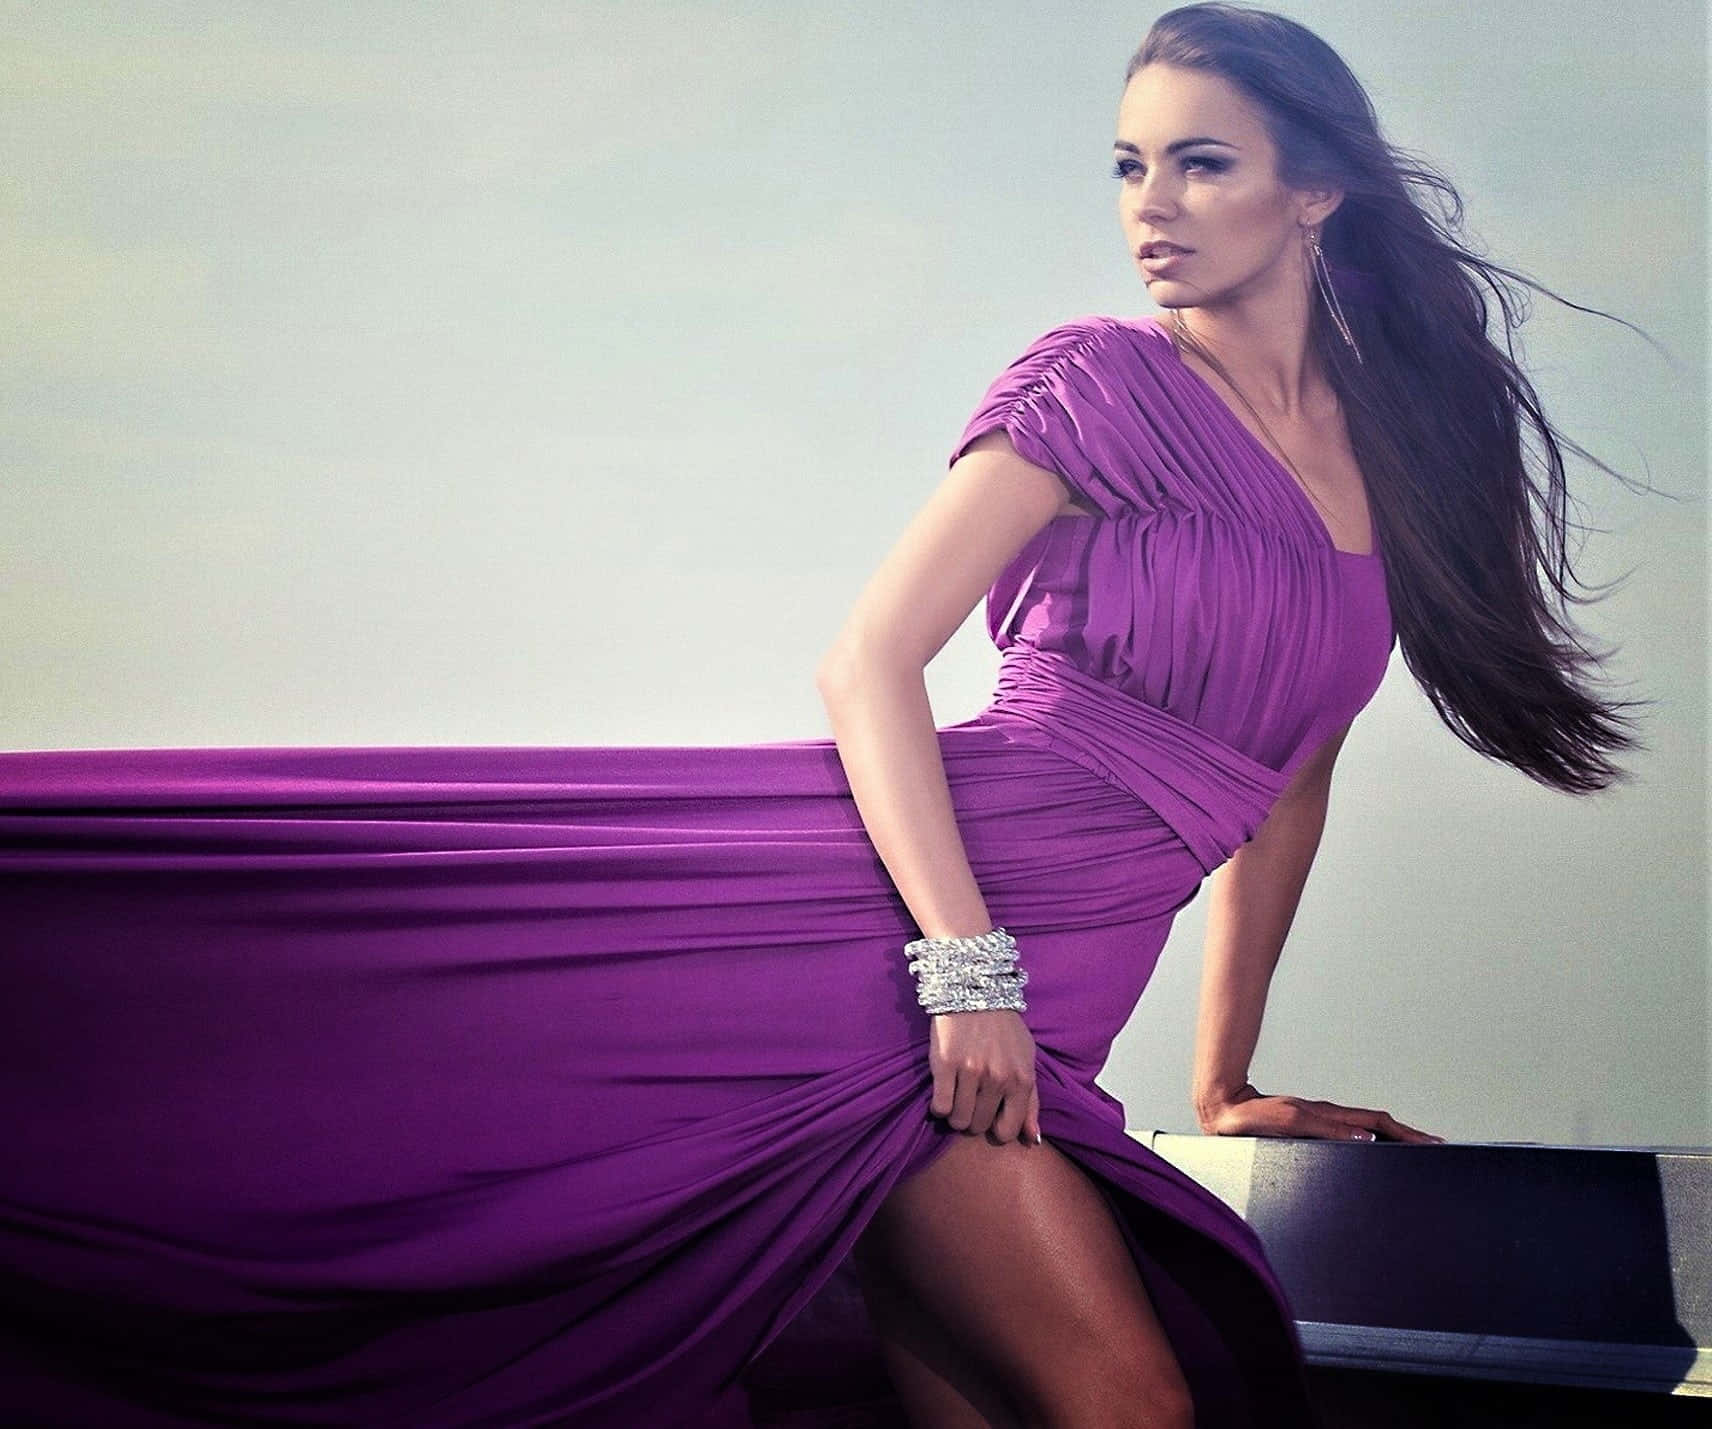 Look Stylish In This Elegant Purple Dress Wallpaper